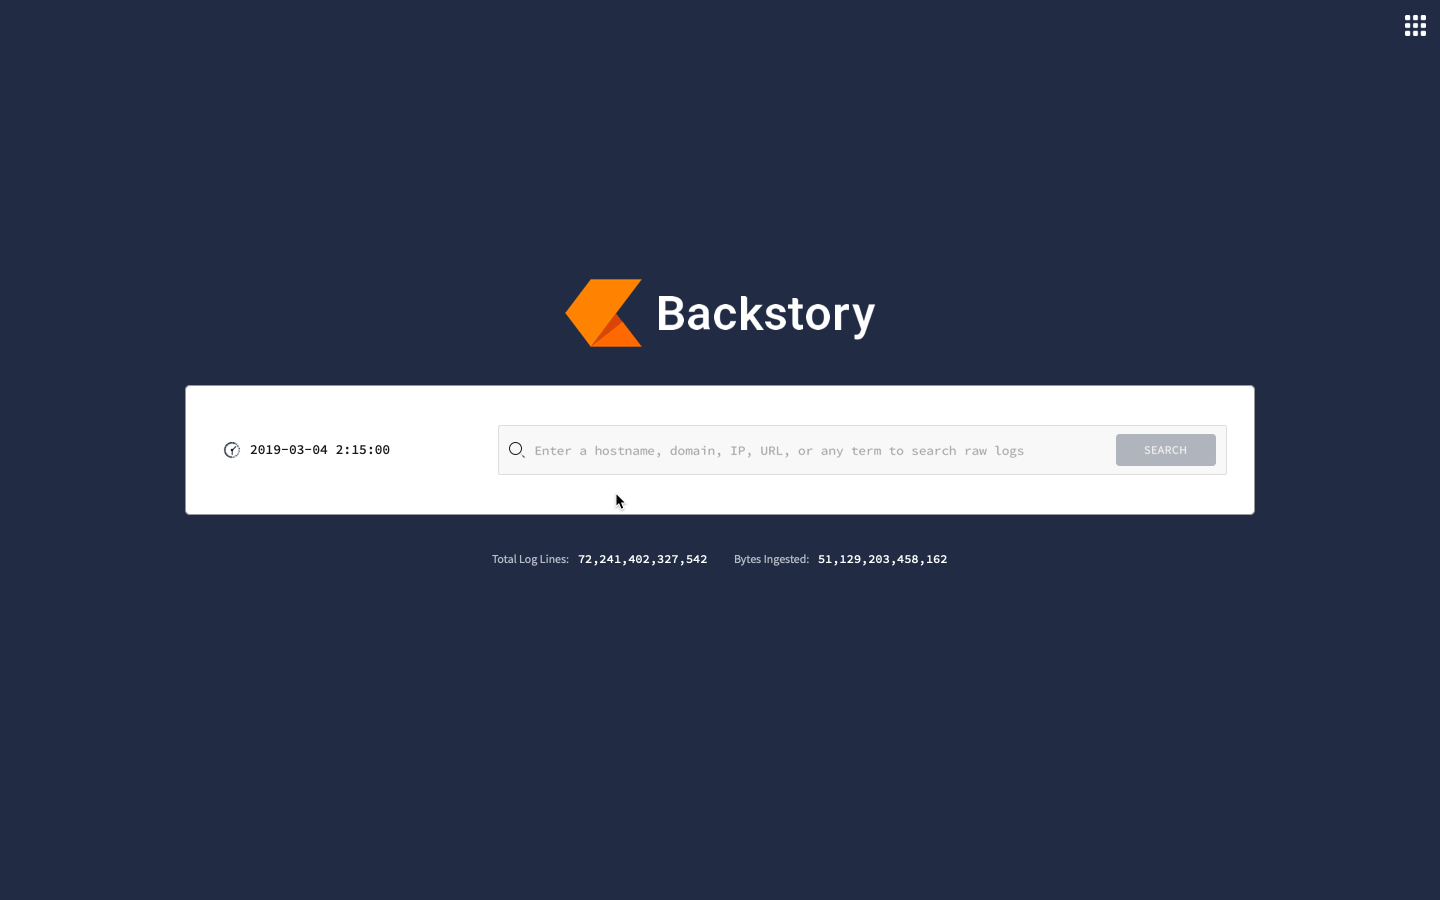 Chronicle Backstory security platform